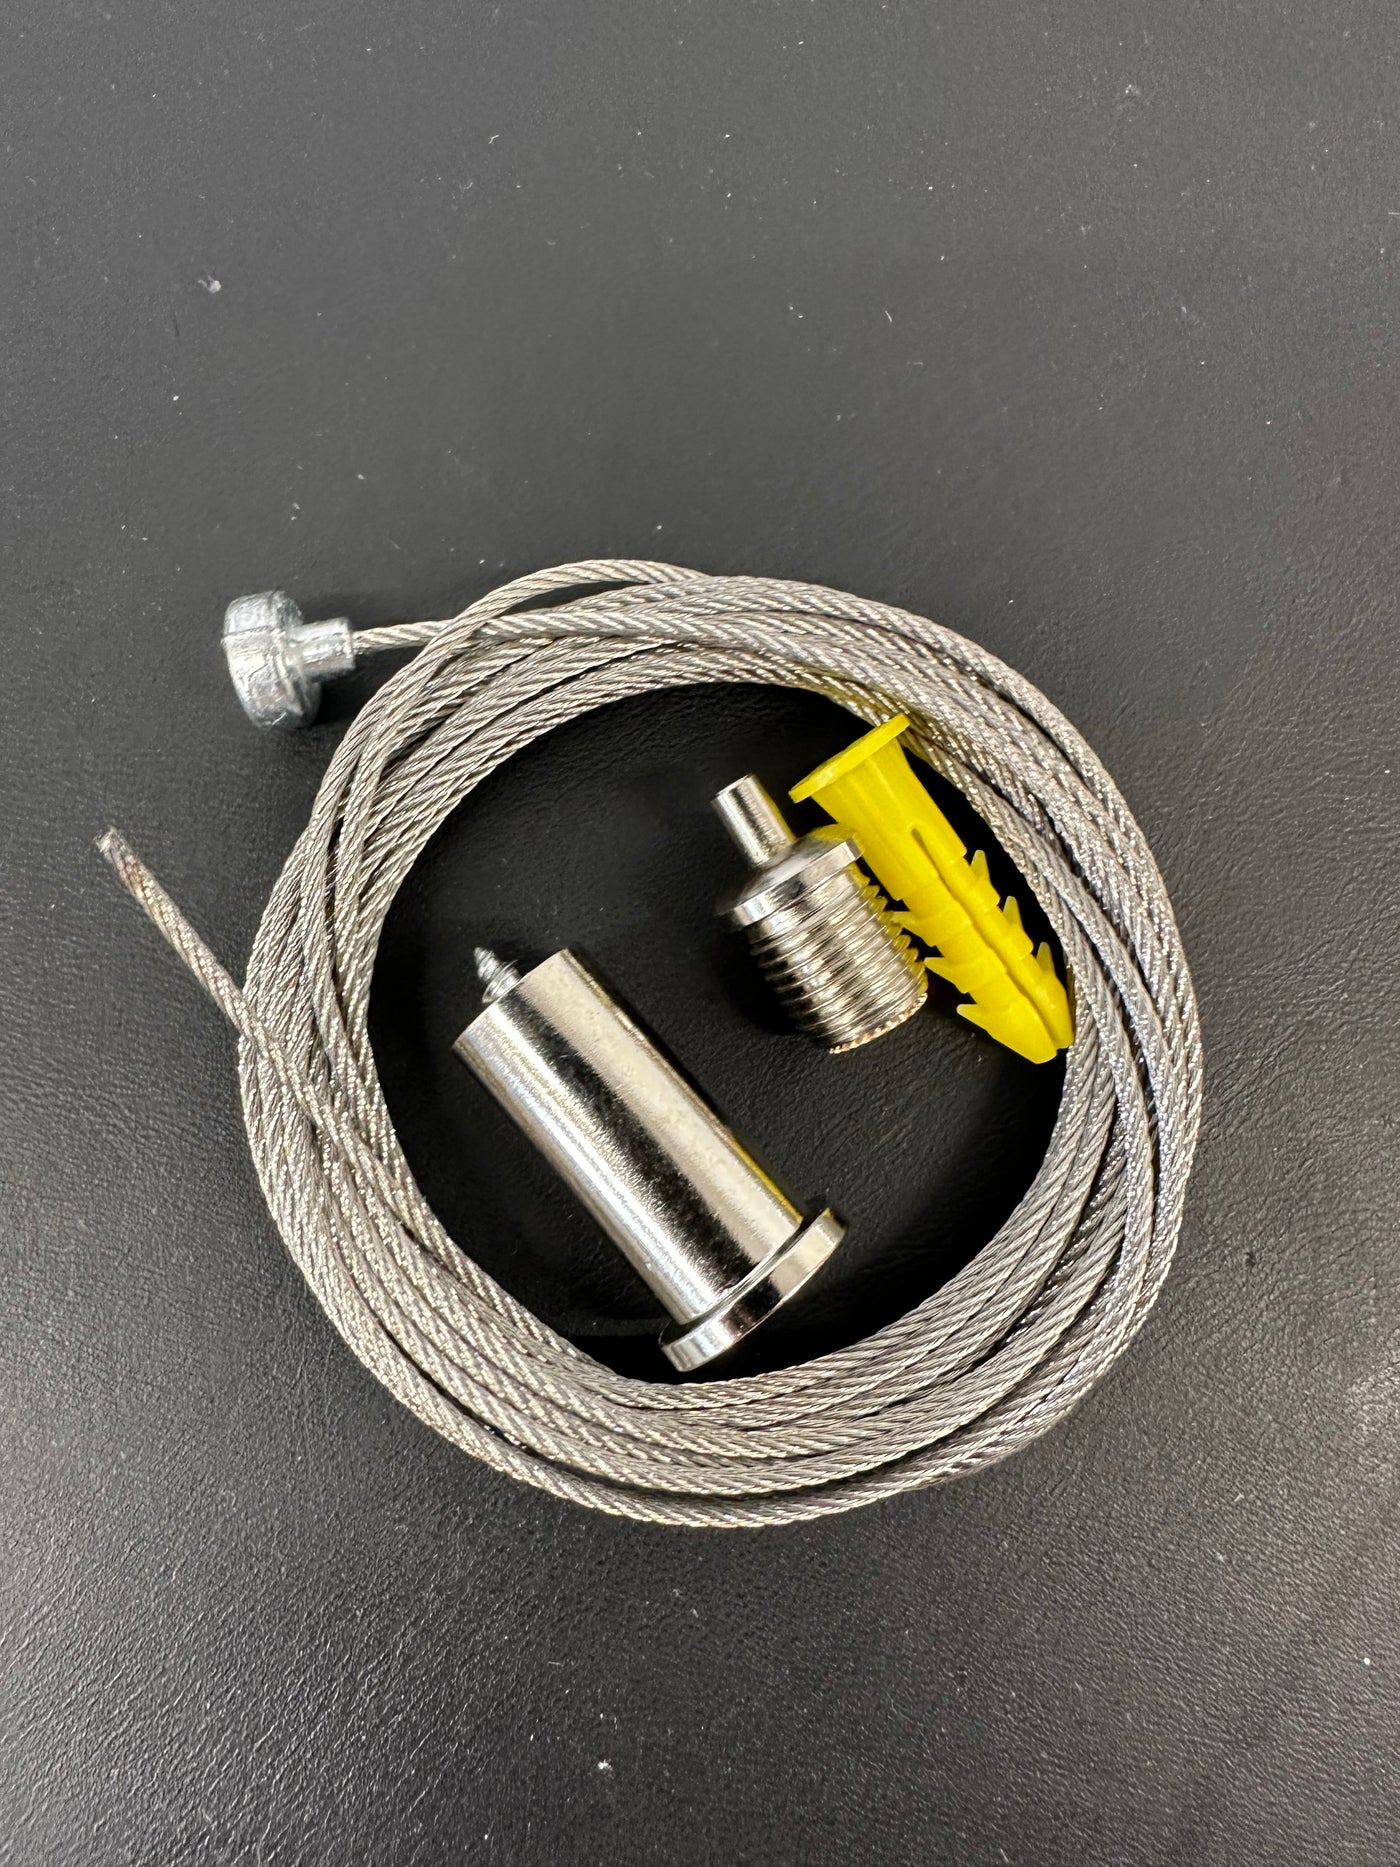 1 - 3 Metre Cable Suspension Kit